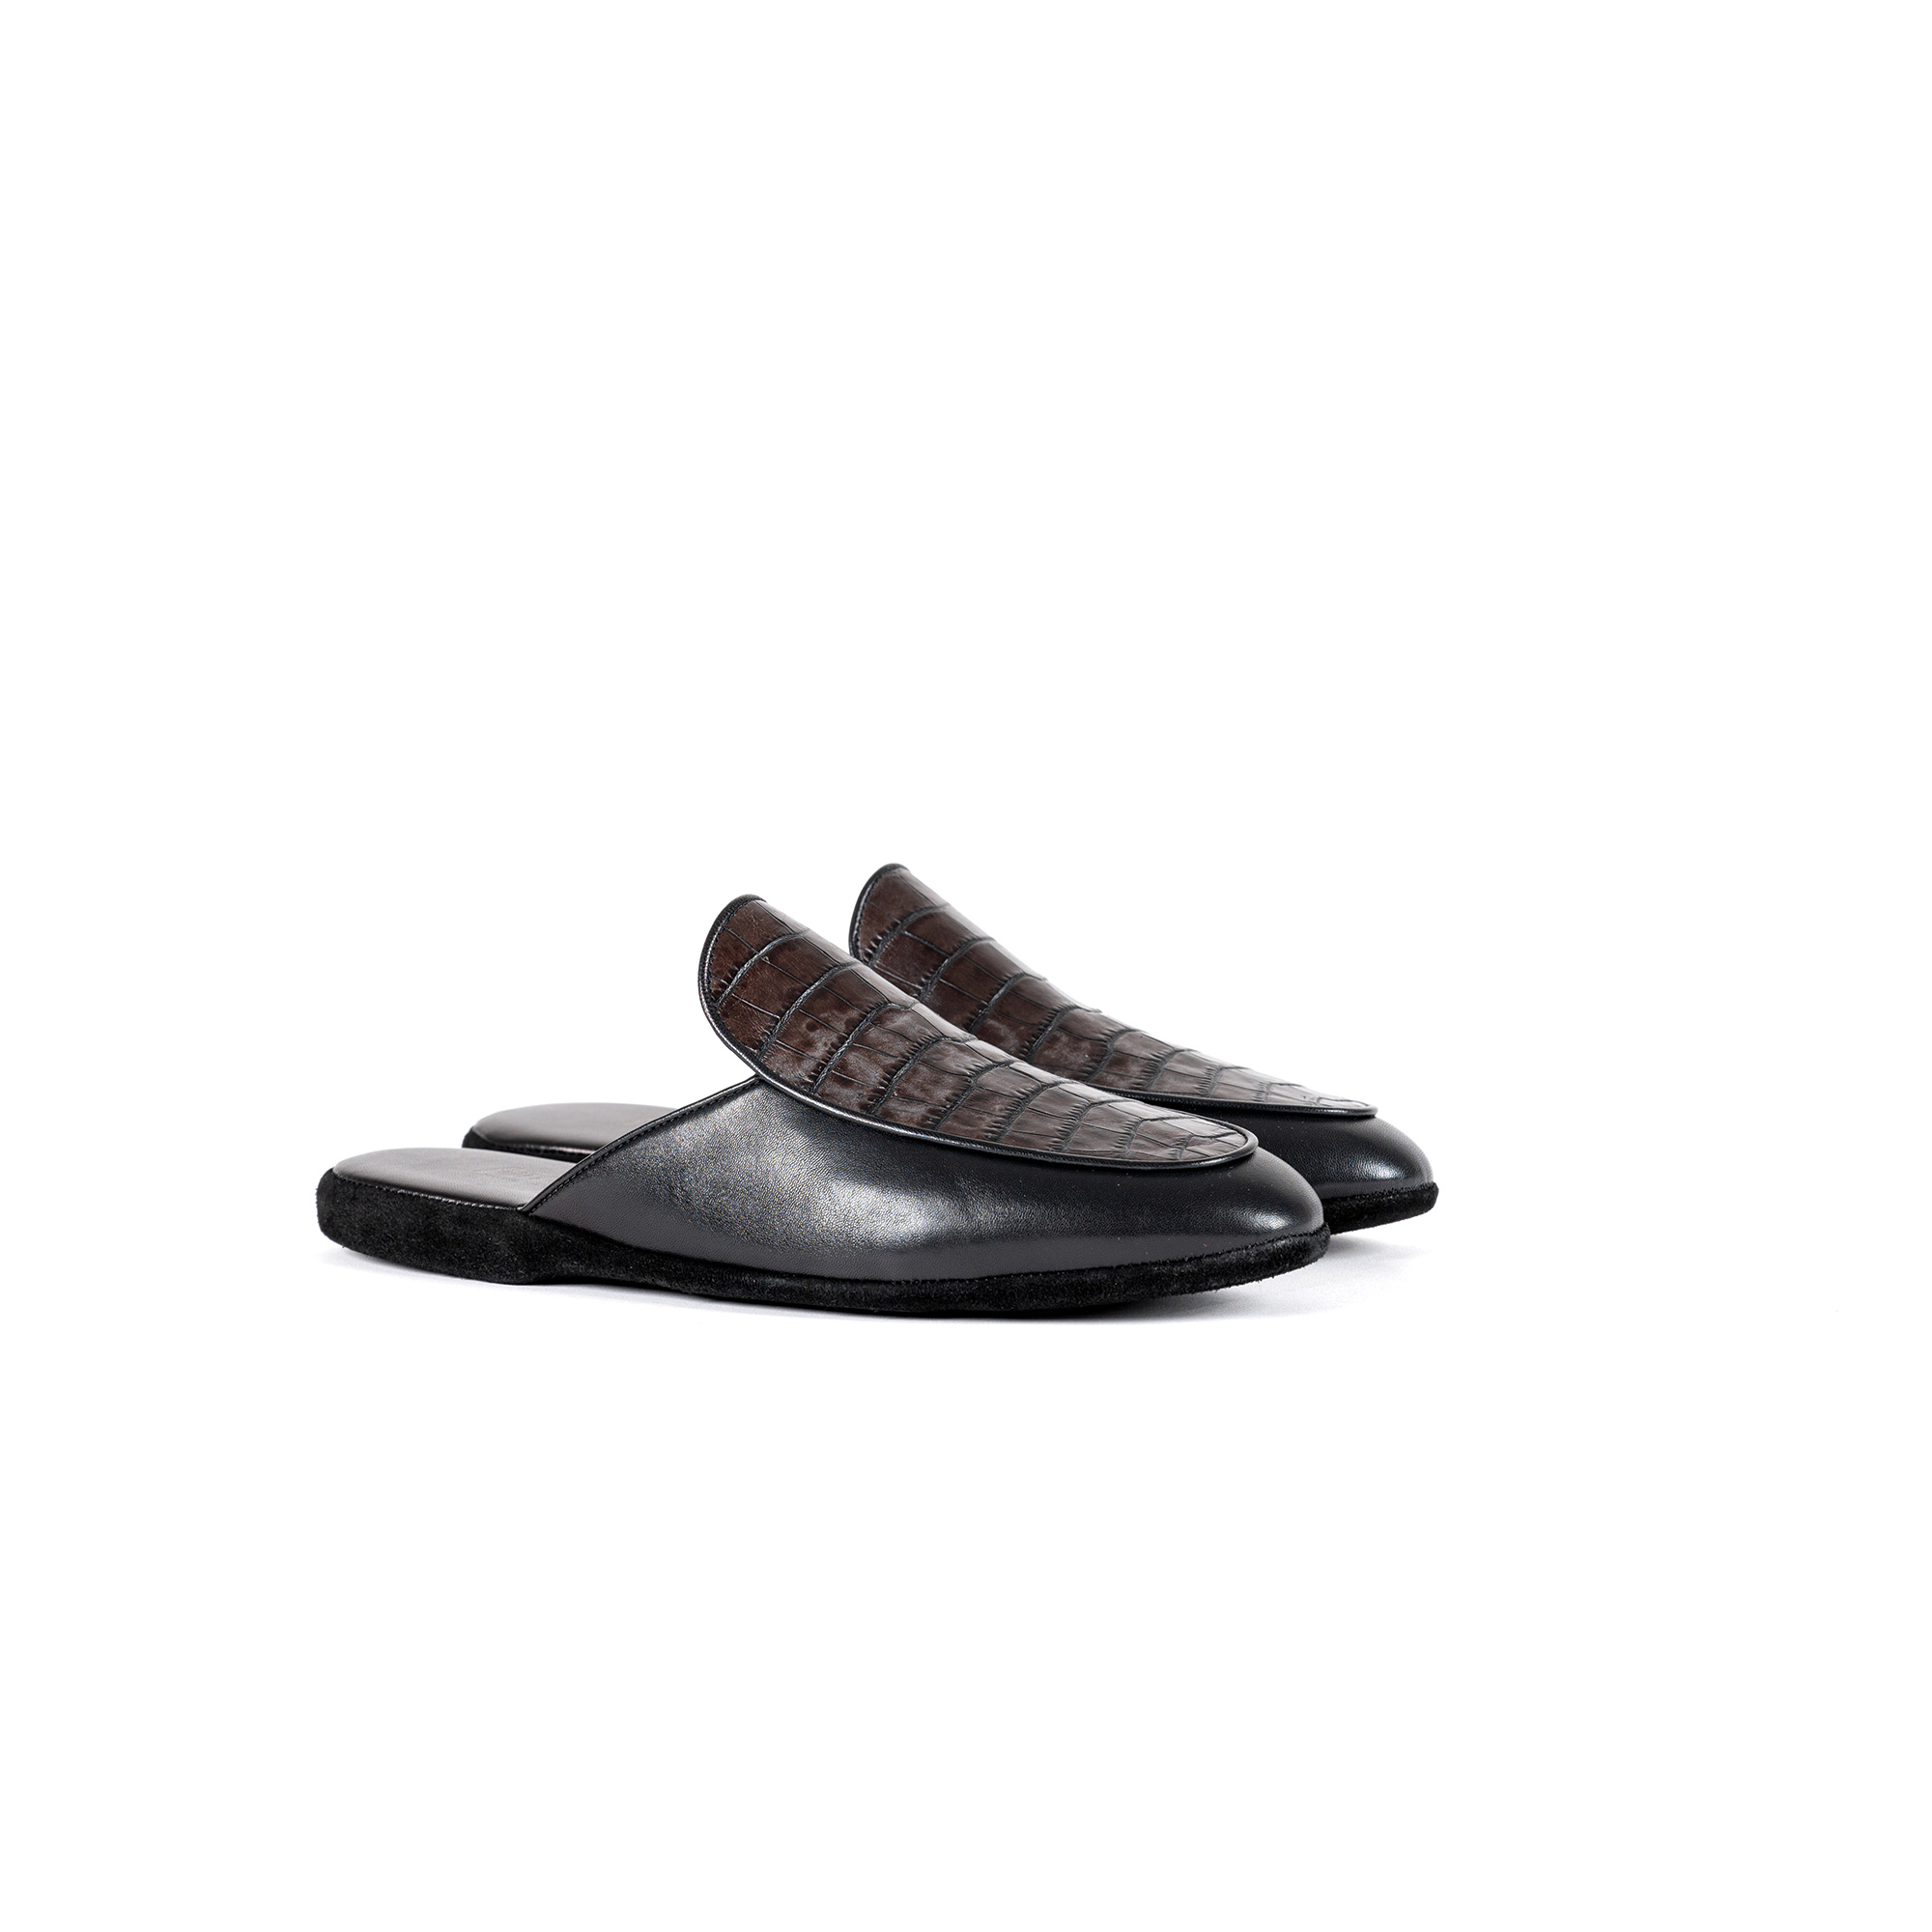 Pantofola interno lusso in nappa - Farfalla italian slippers